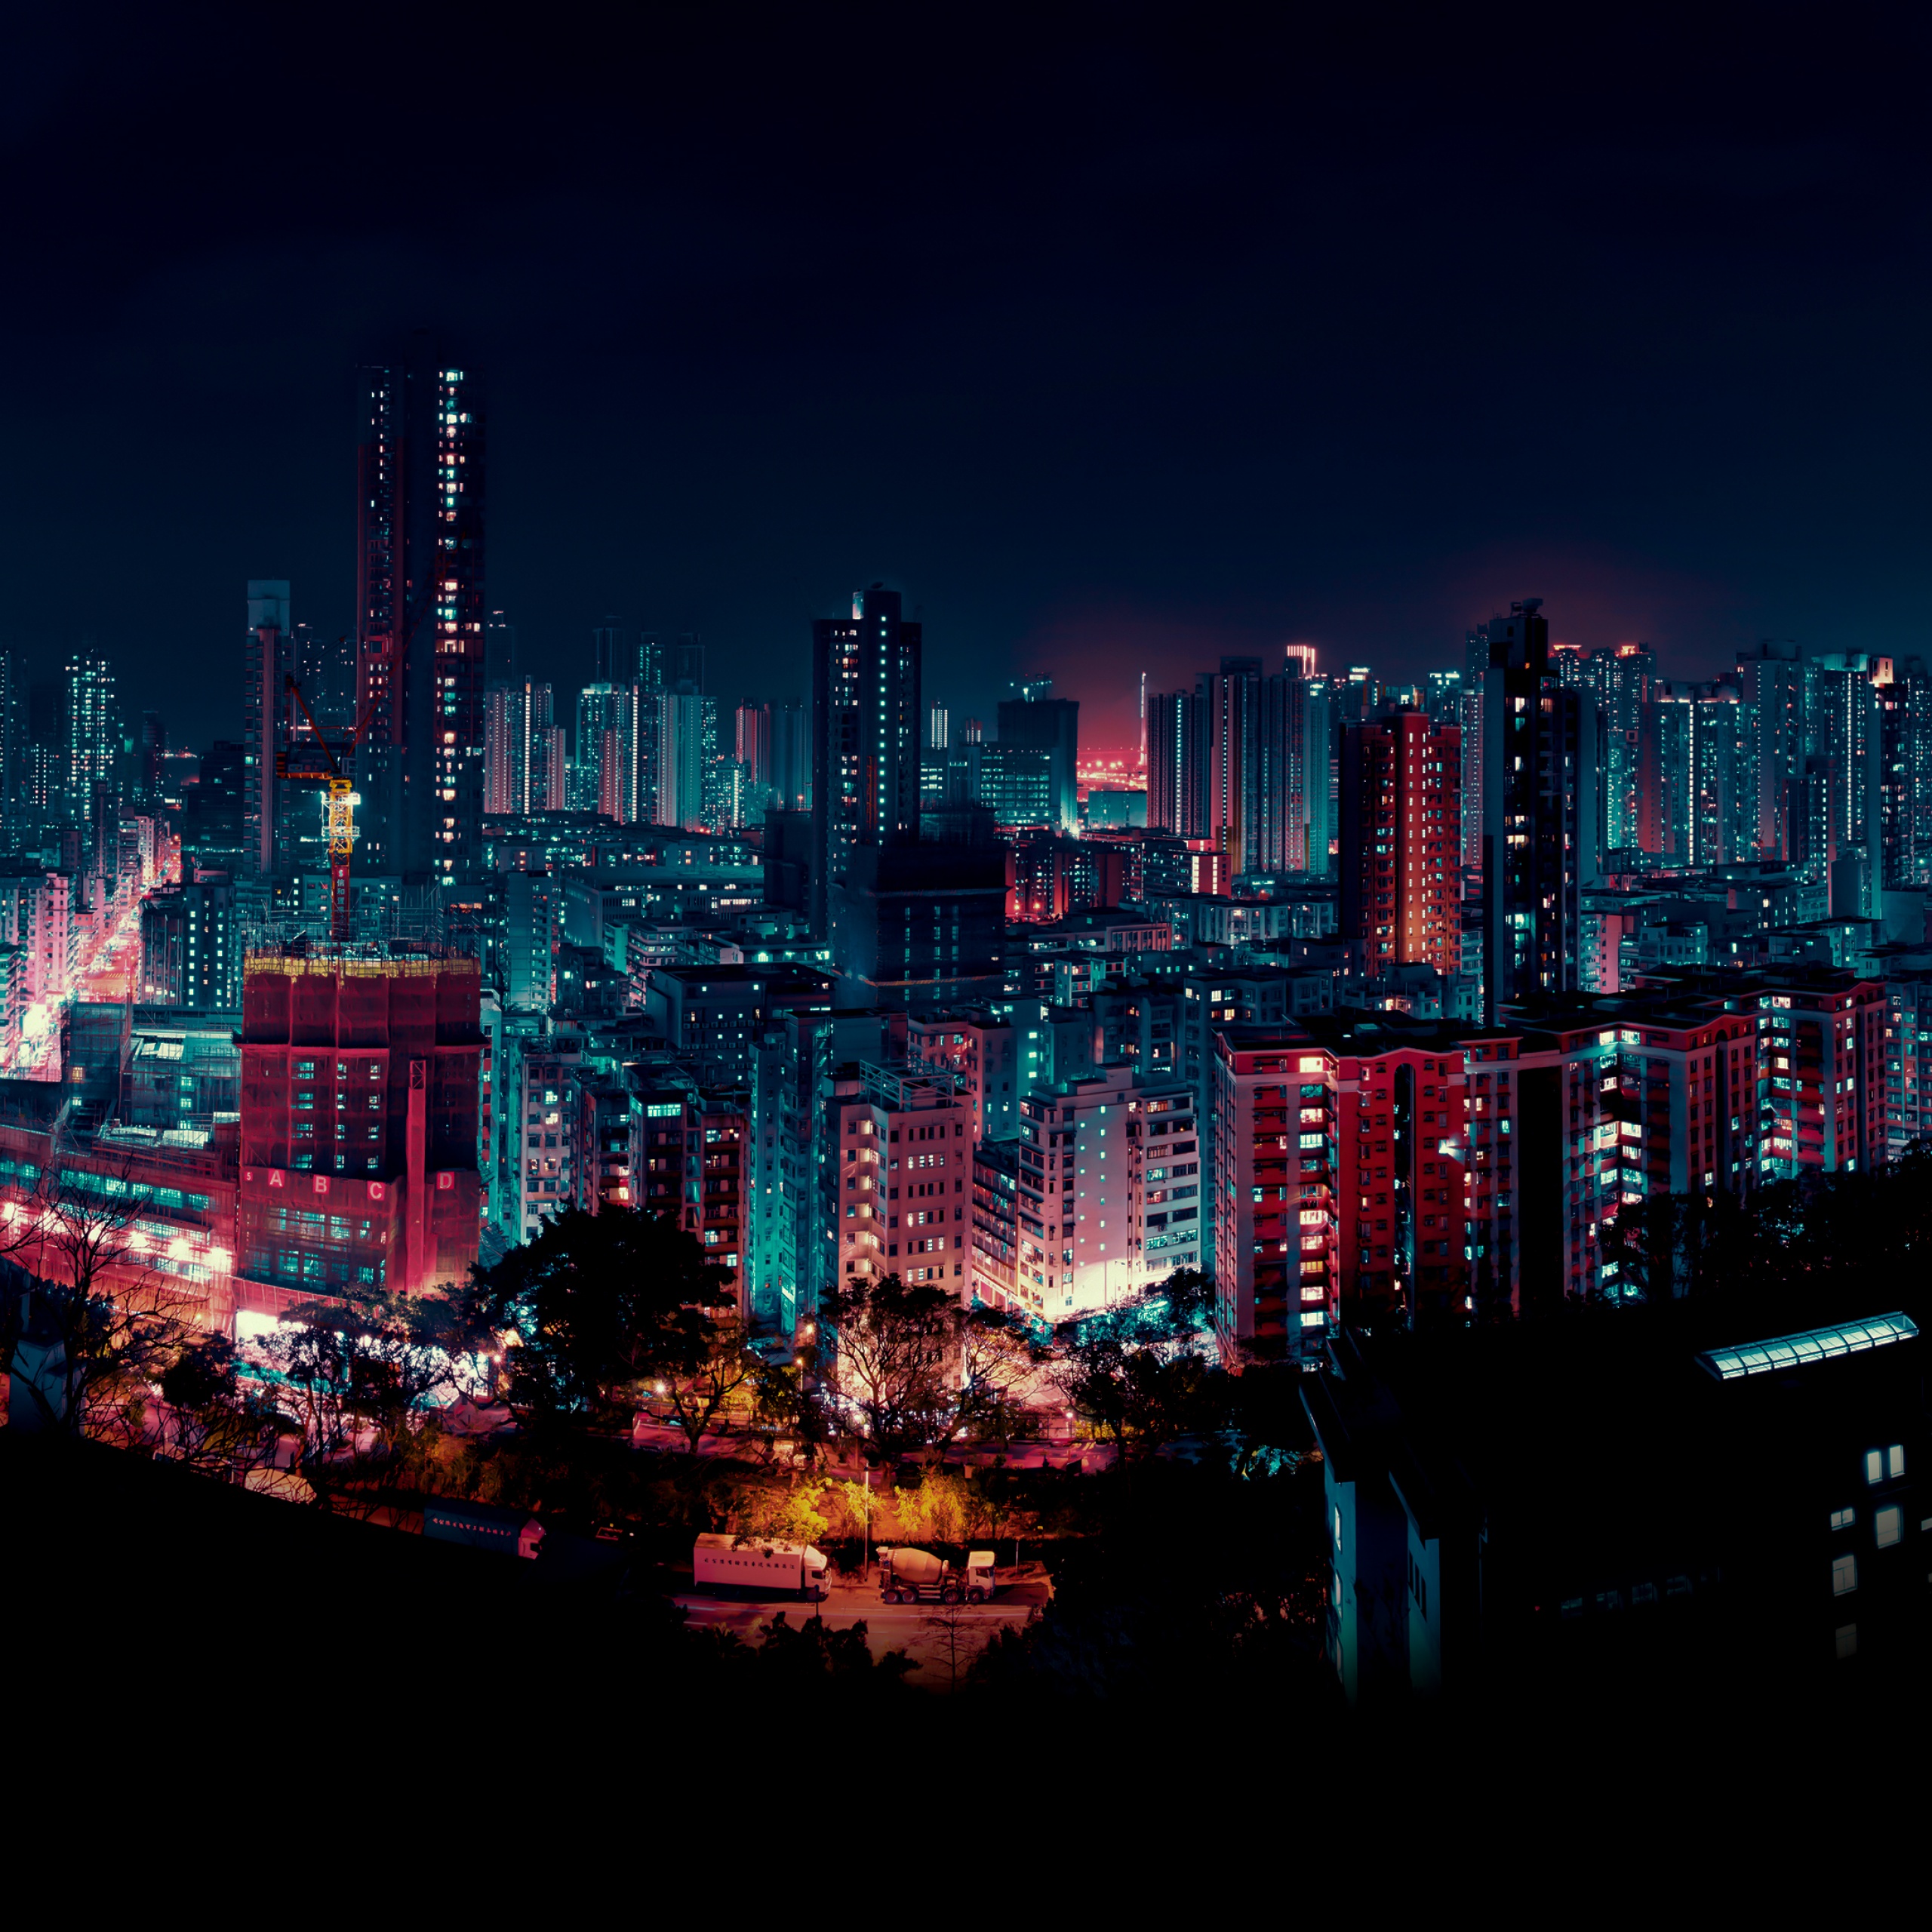 City Lights Wallpaper 67 images